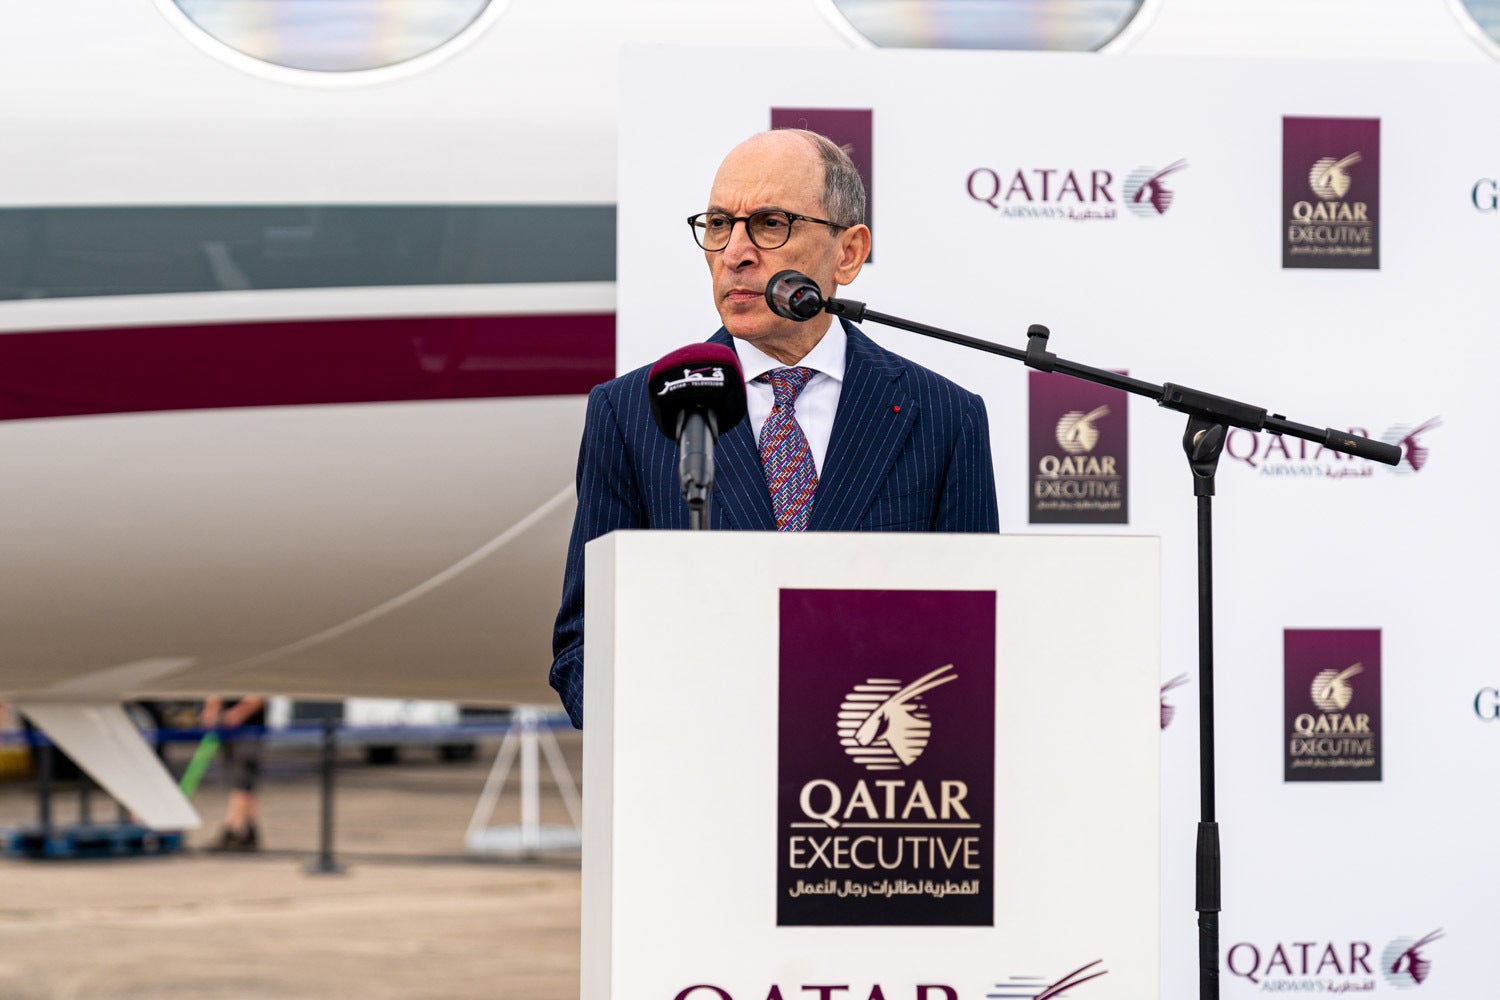 Qatar-CEO-SLOTNICK